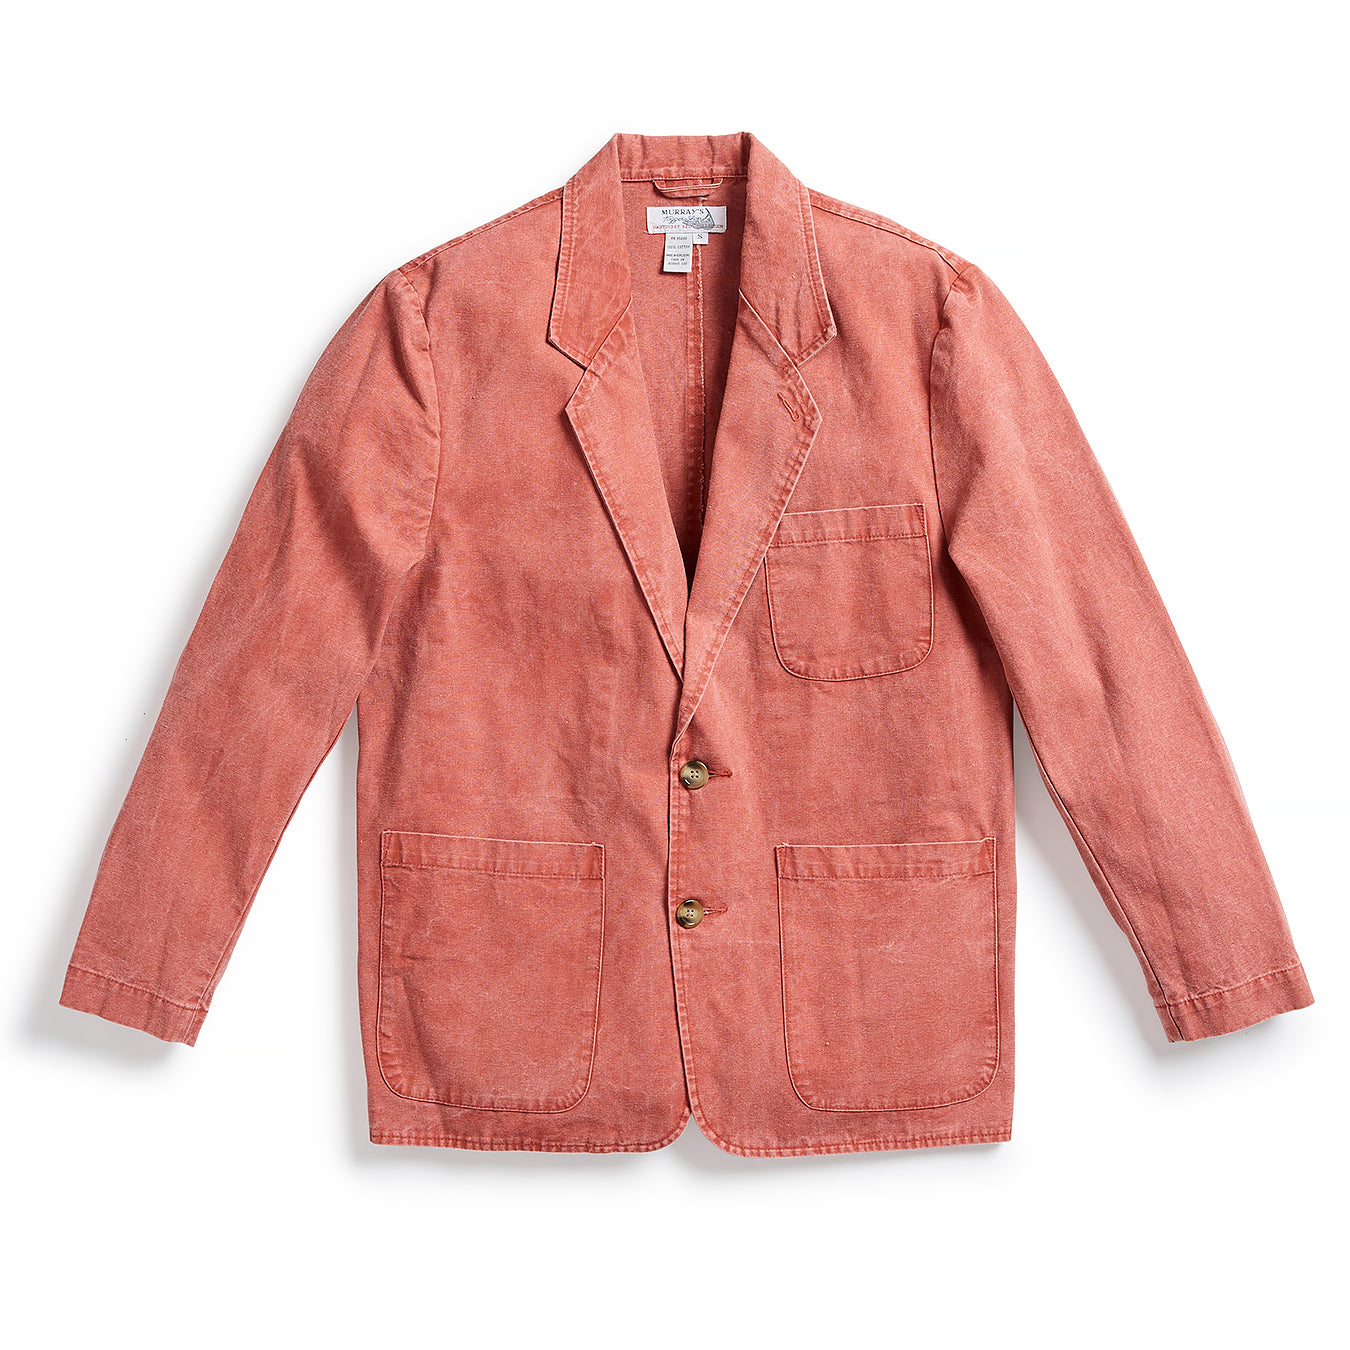 Nantucket Reds Collection® Butter Fleece Full Zip Jacket